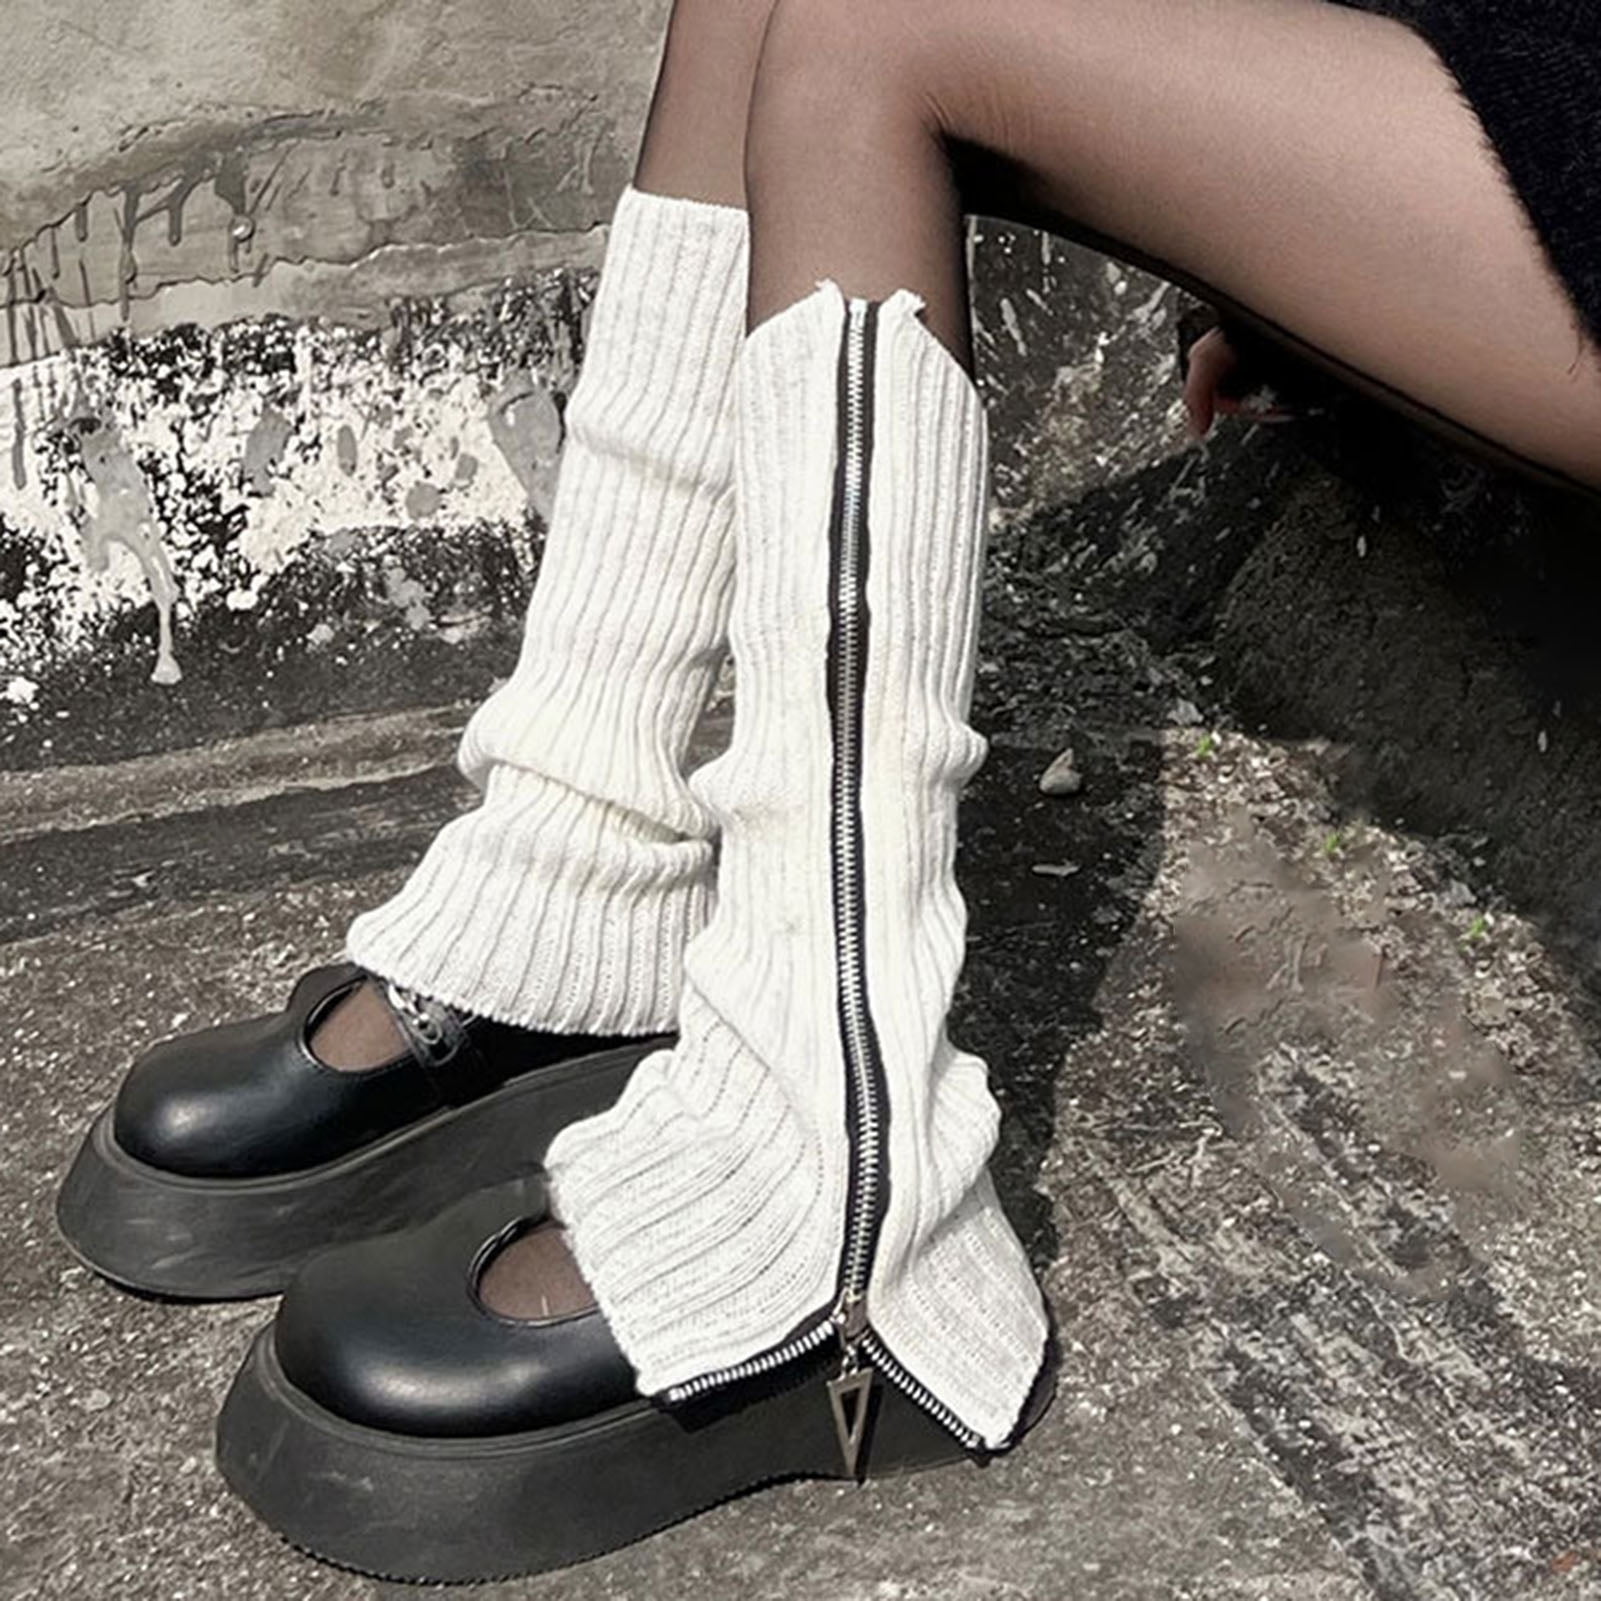 D-GROEE 1 Pair Women's Fashion Winter Leggings Boots Long Leg Warmer Knit  Zipper Up Socks Knitted Warm High socks